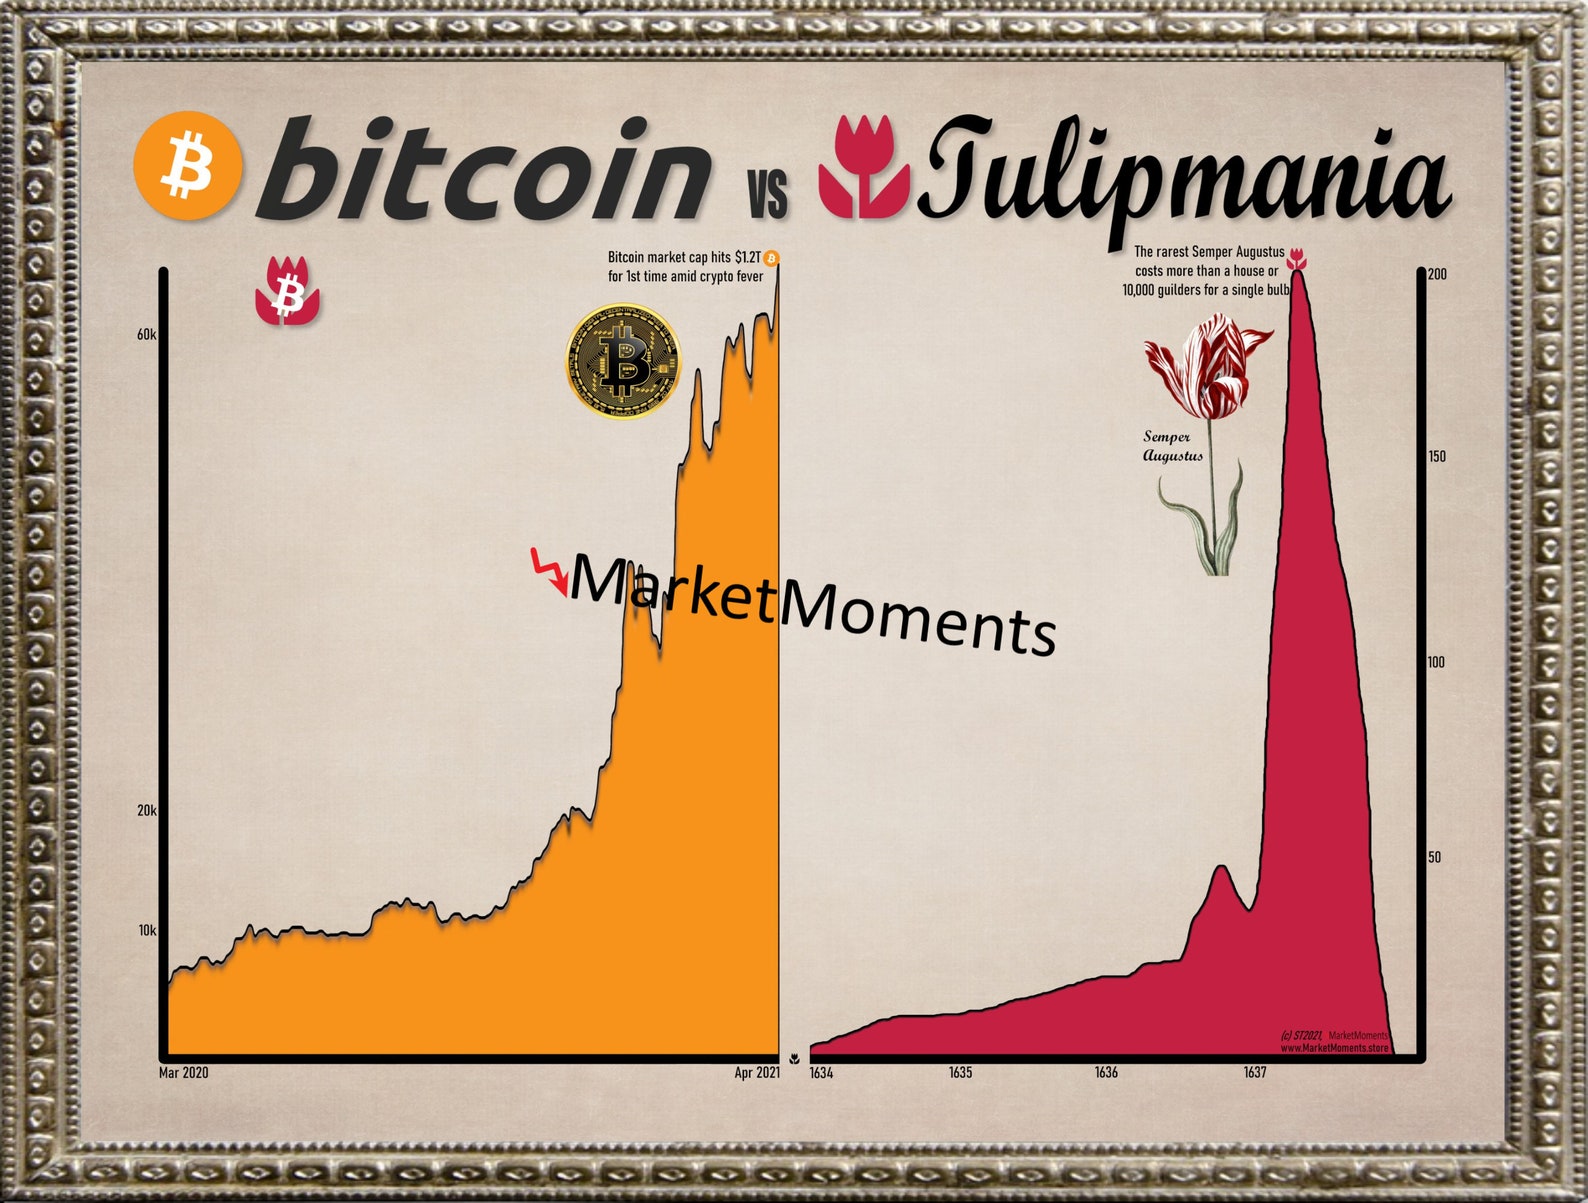 bitcoin and tulip mania